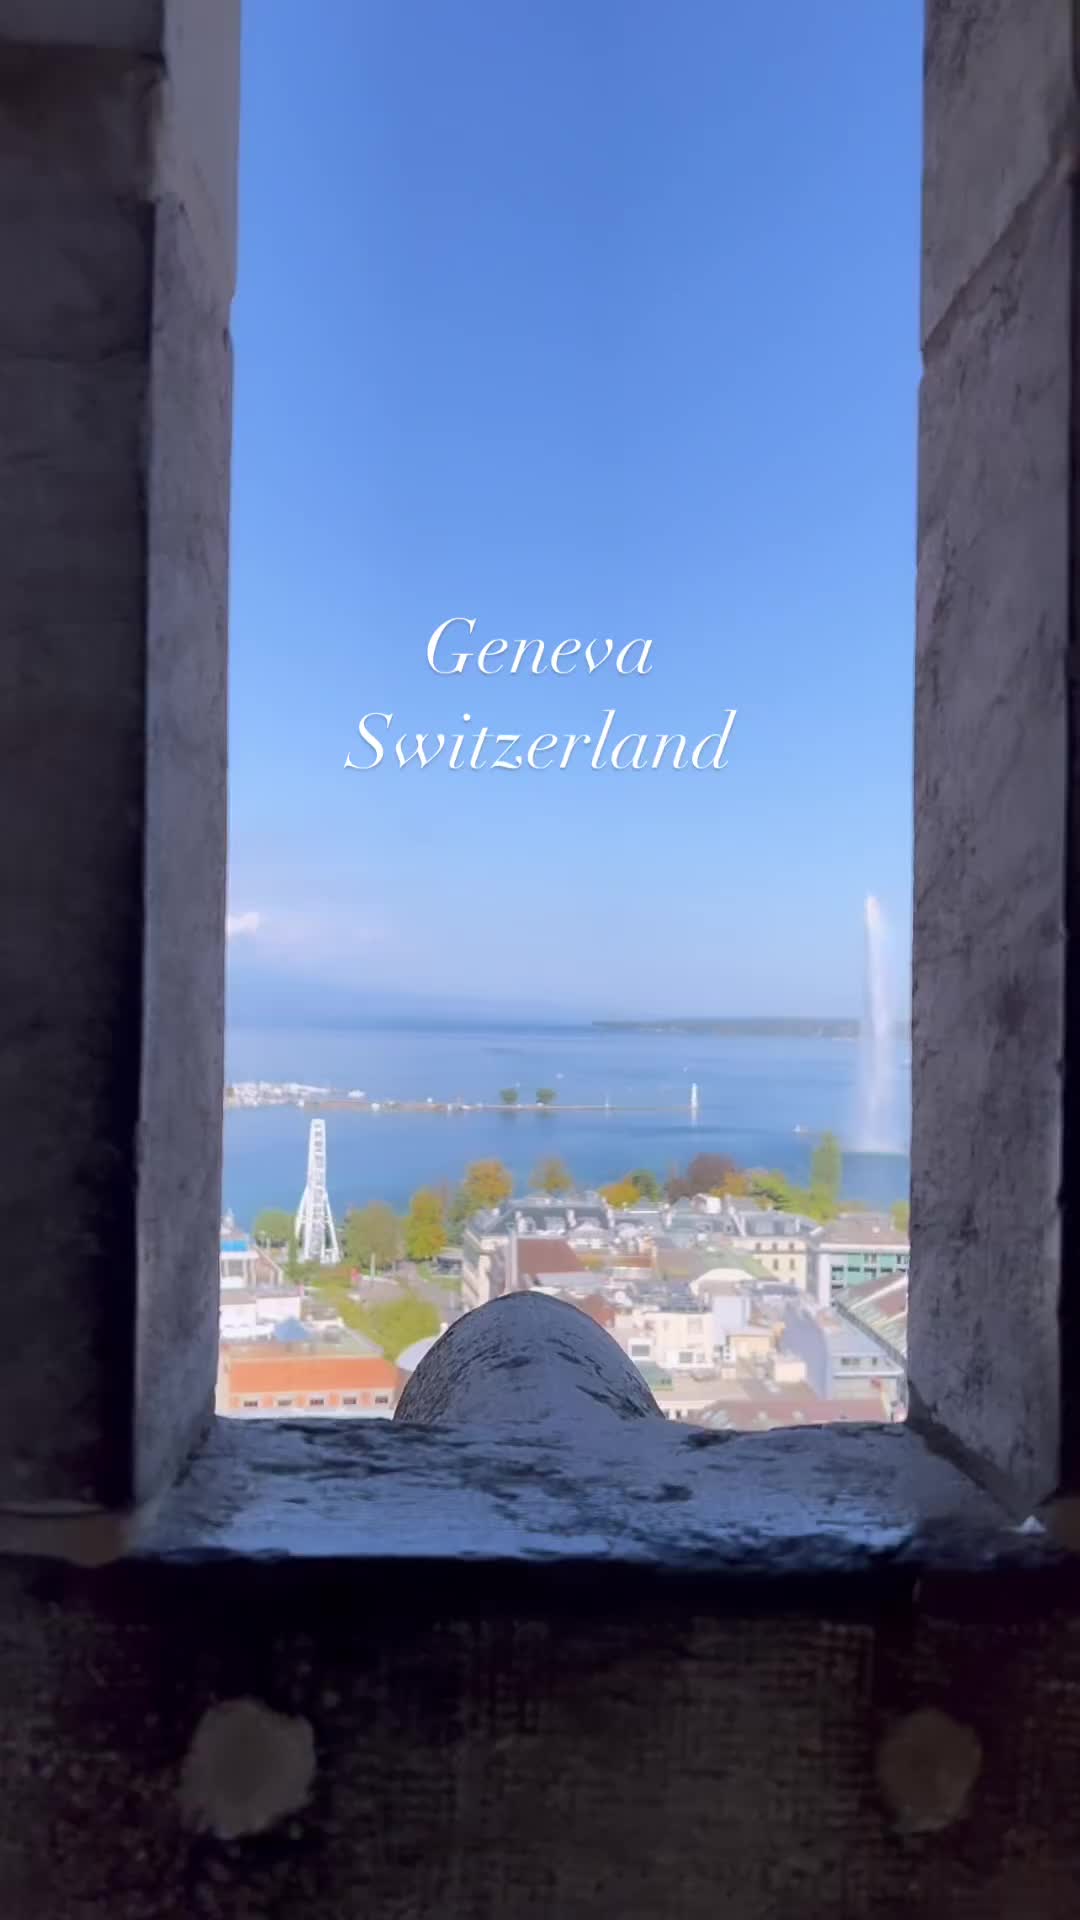 Geneva Highlights: Food & Scenic Views This Week